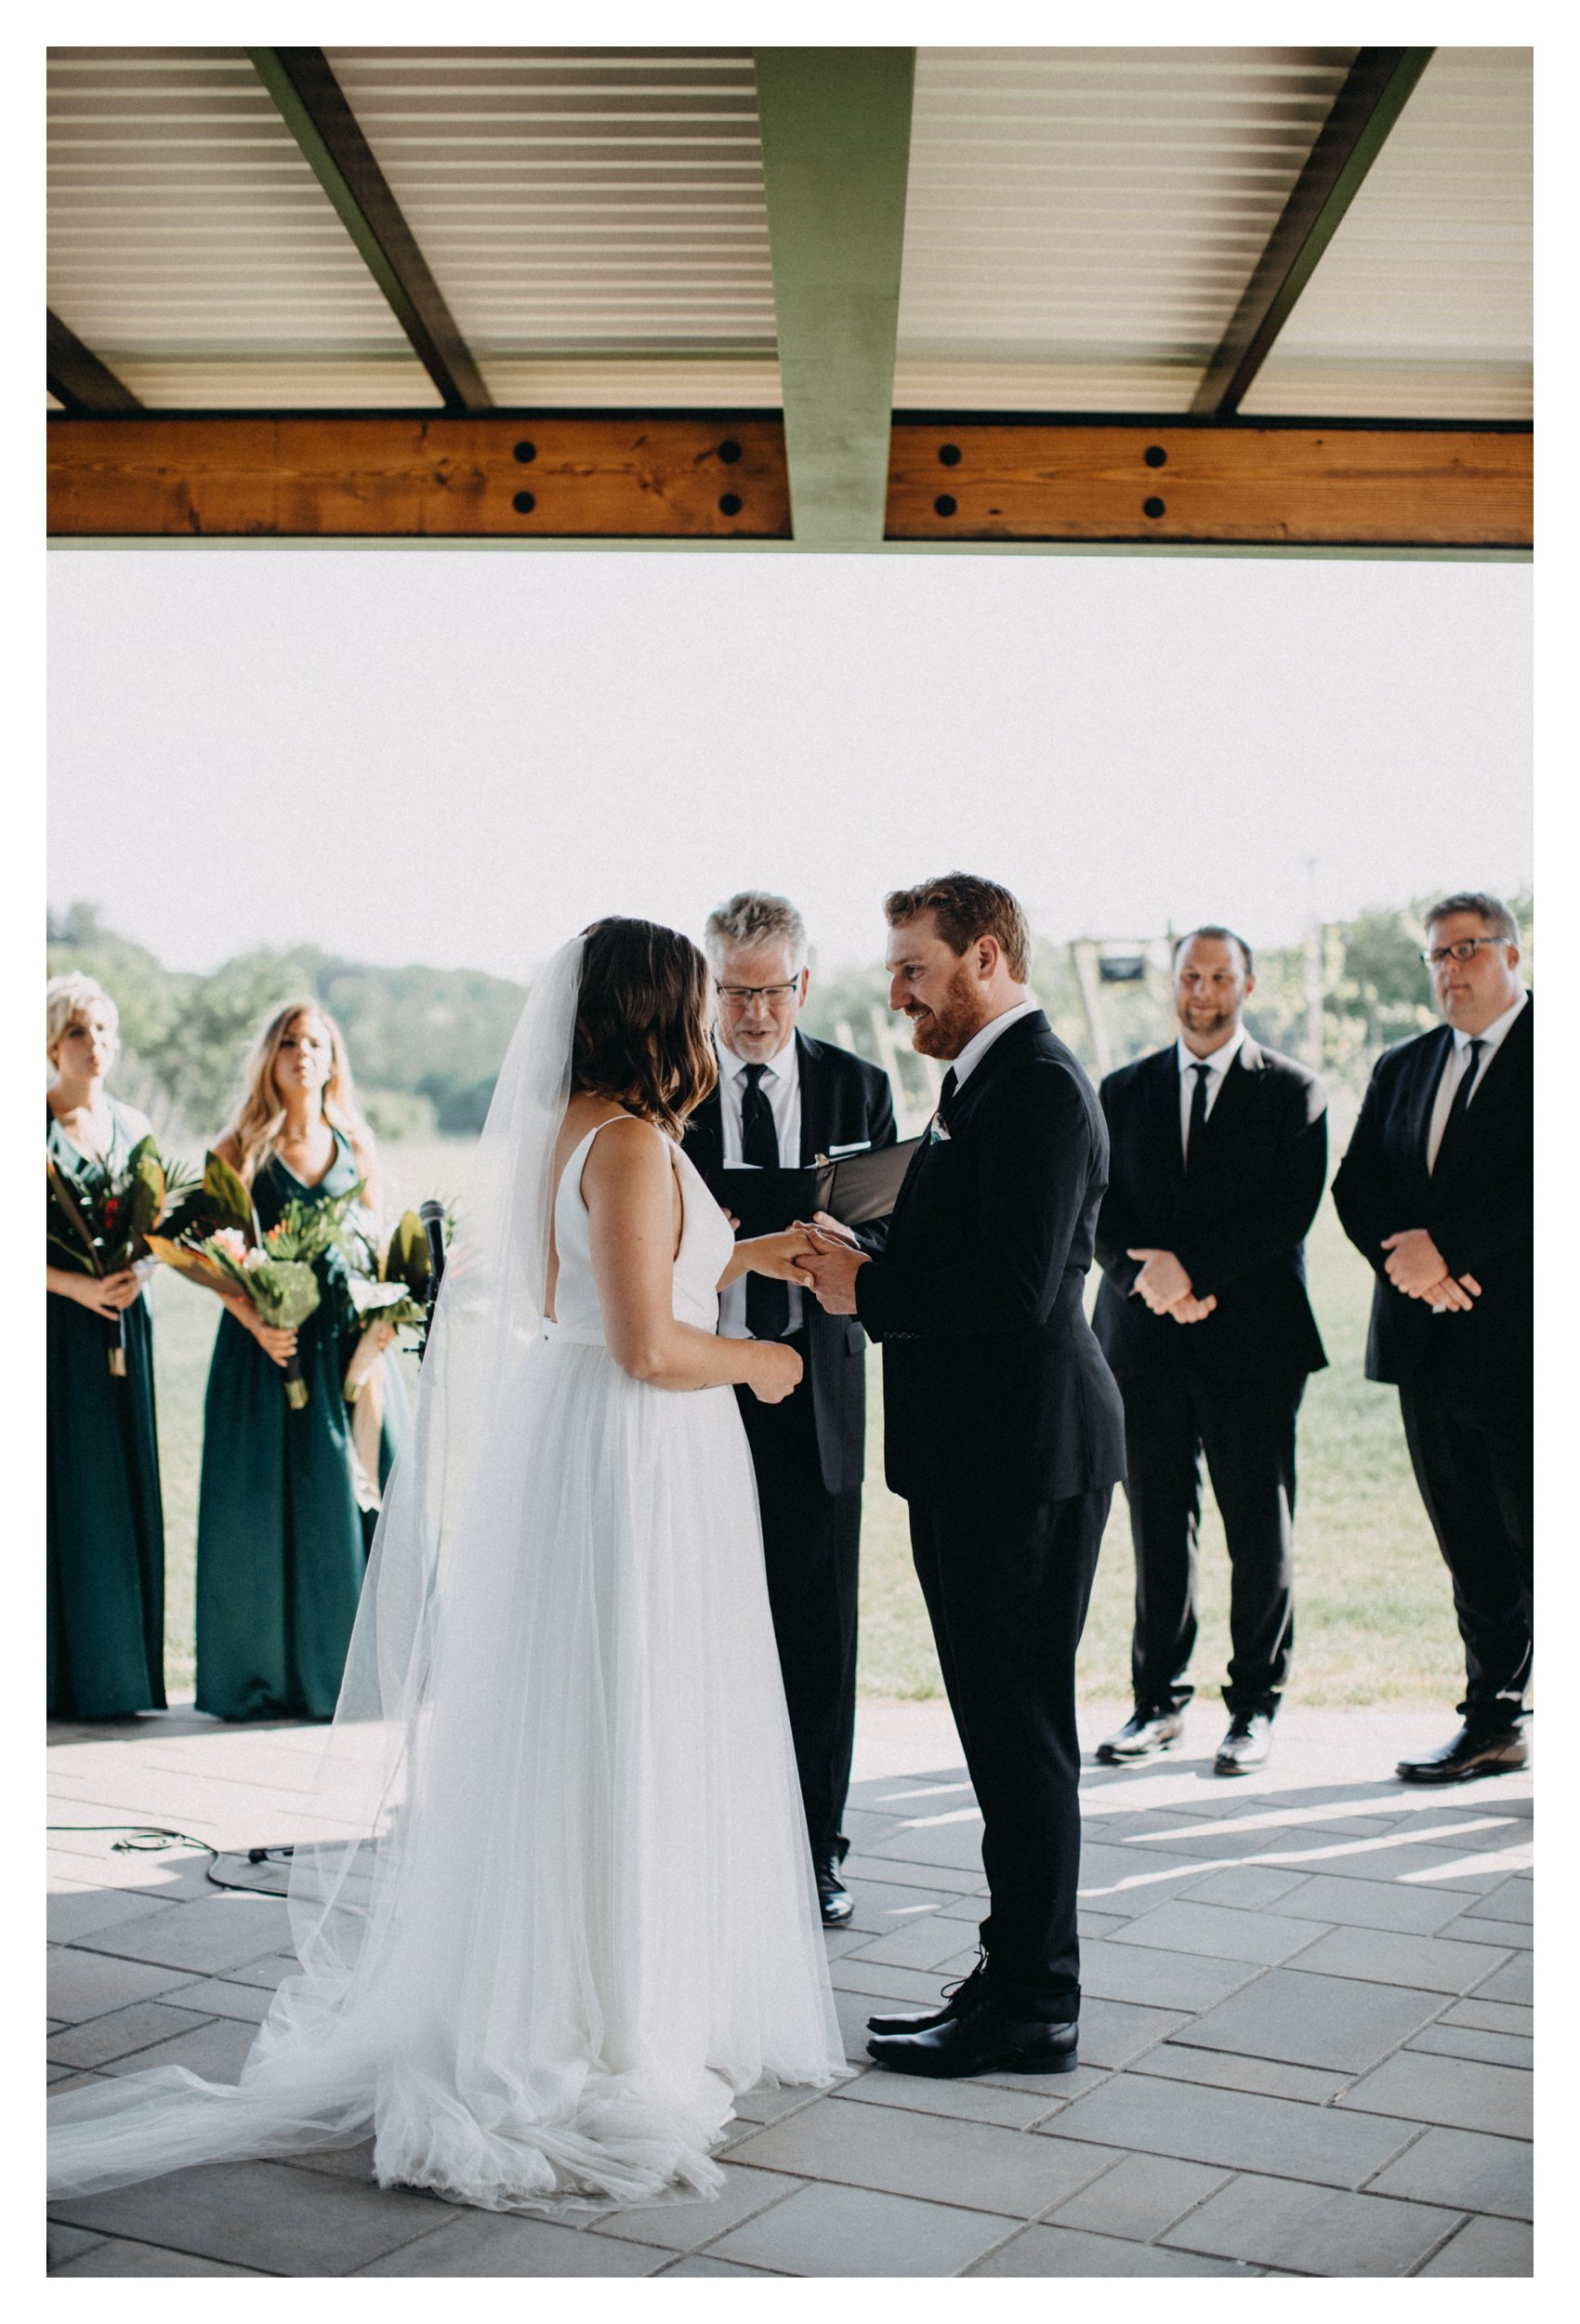 Bride and groom exchanging wedding bands during ceremony overlooking vineyard in Minnesota